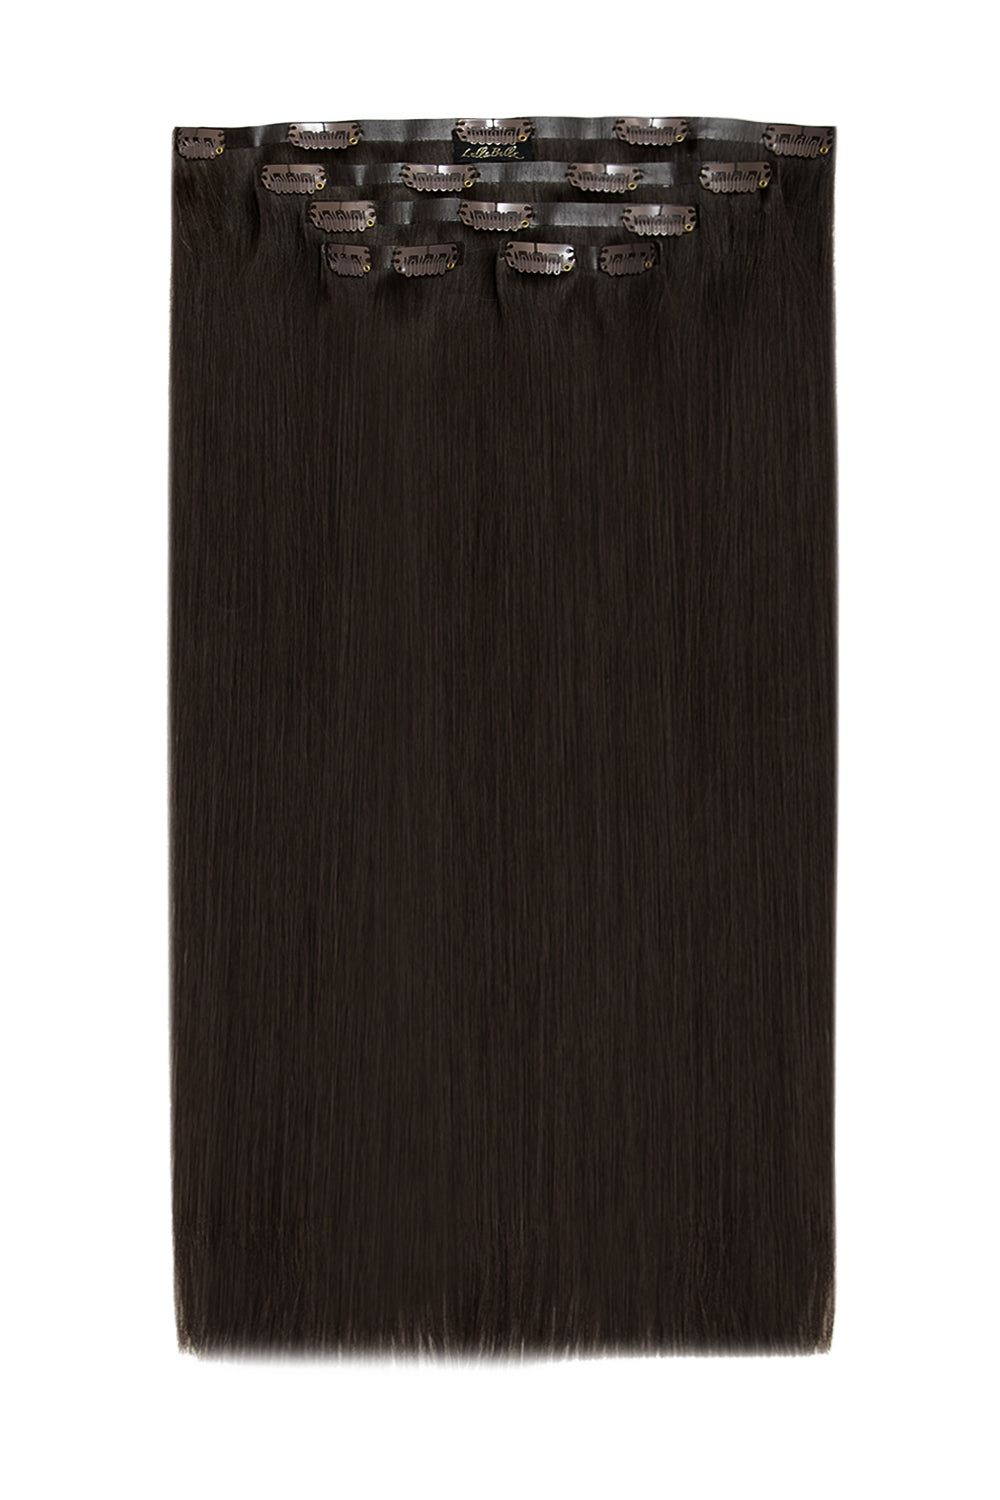 Luxury Gold 18" 5 Piece Human Hair Extensions  - Dark Brown